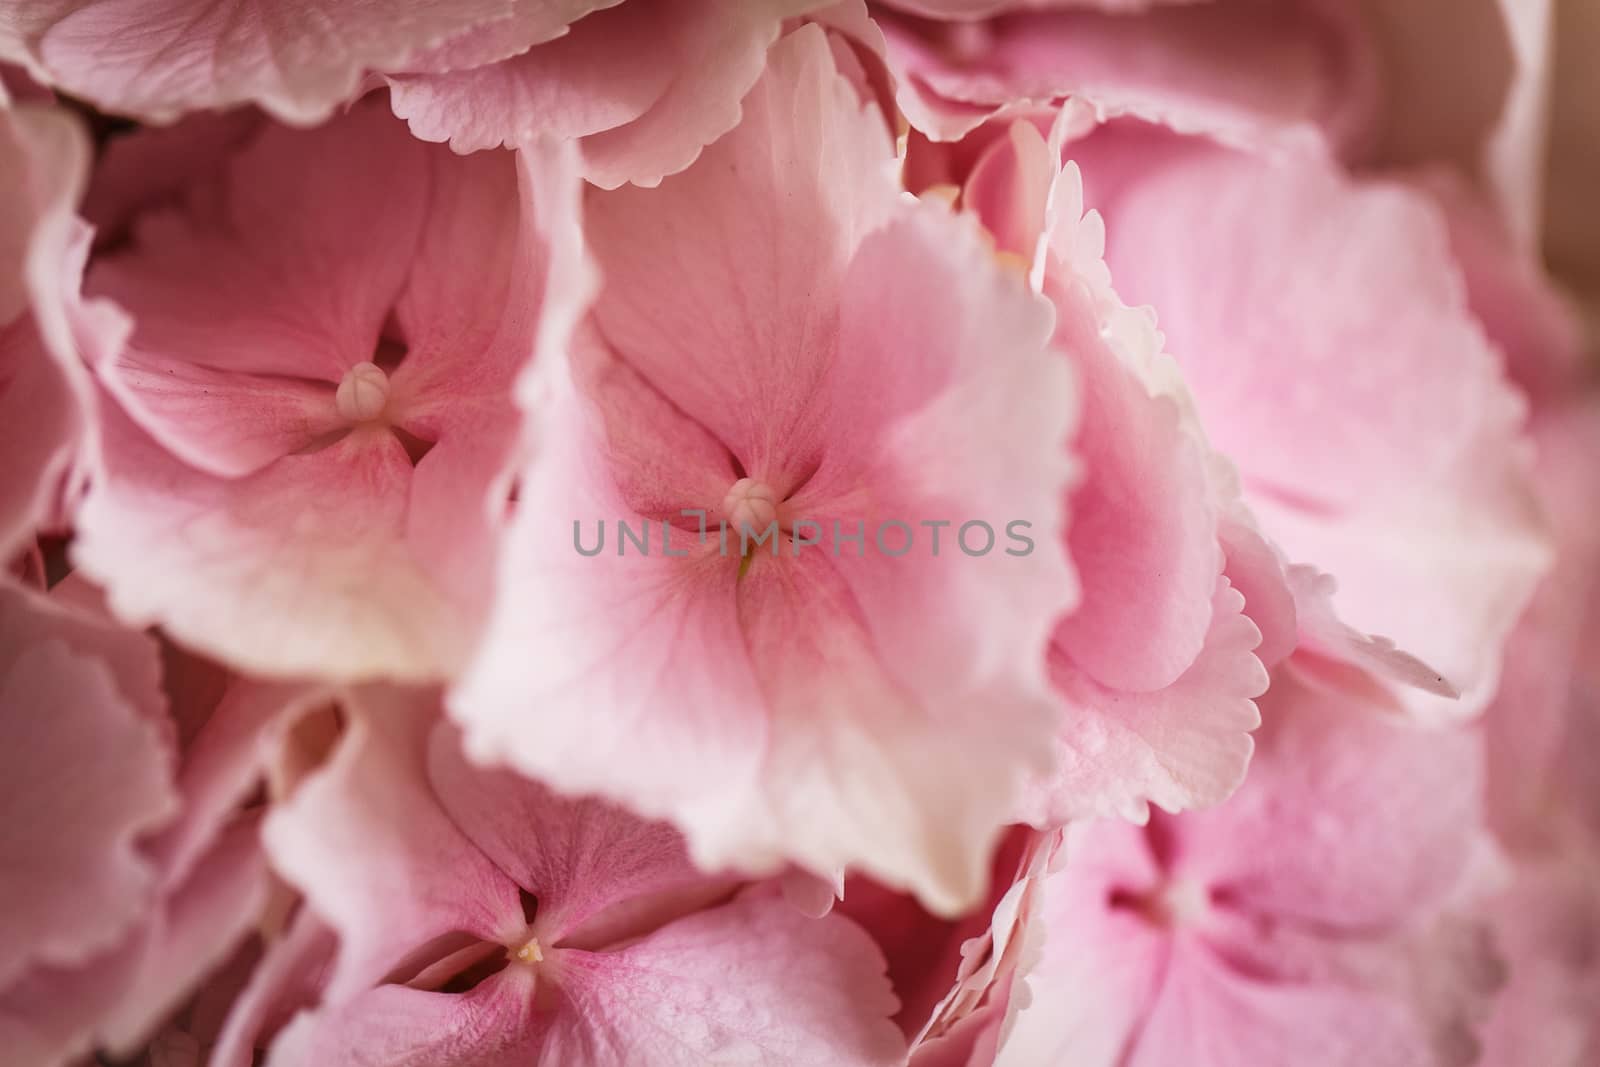 Close up view of pink beautiful flower hydrangea